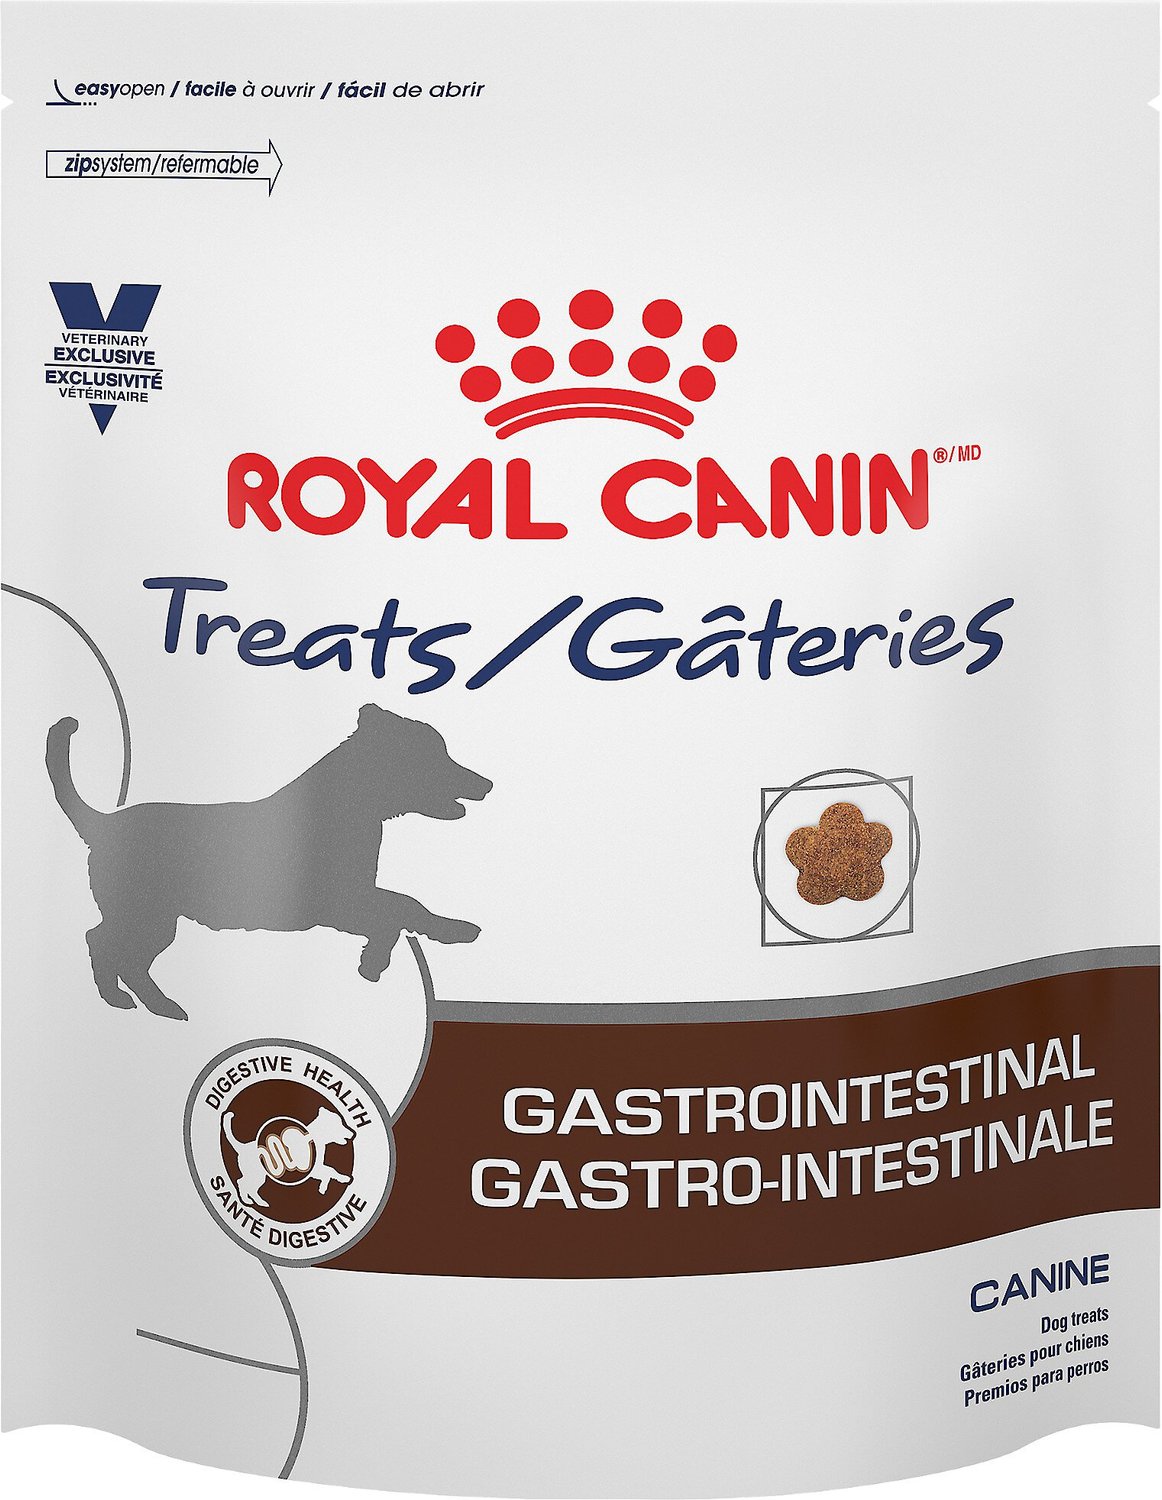 Royal Canin Veterinary Diet Gastrointestinal Canine Dog Treats, 1.1lb